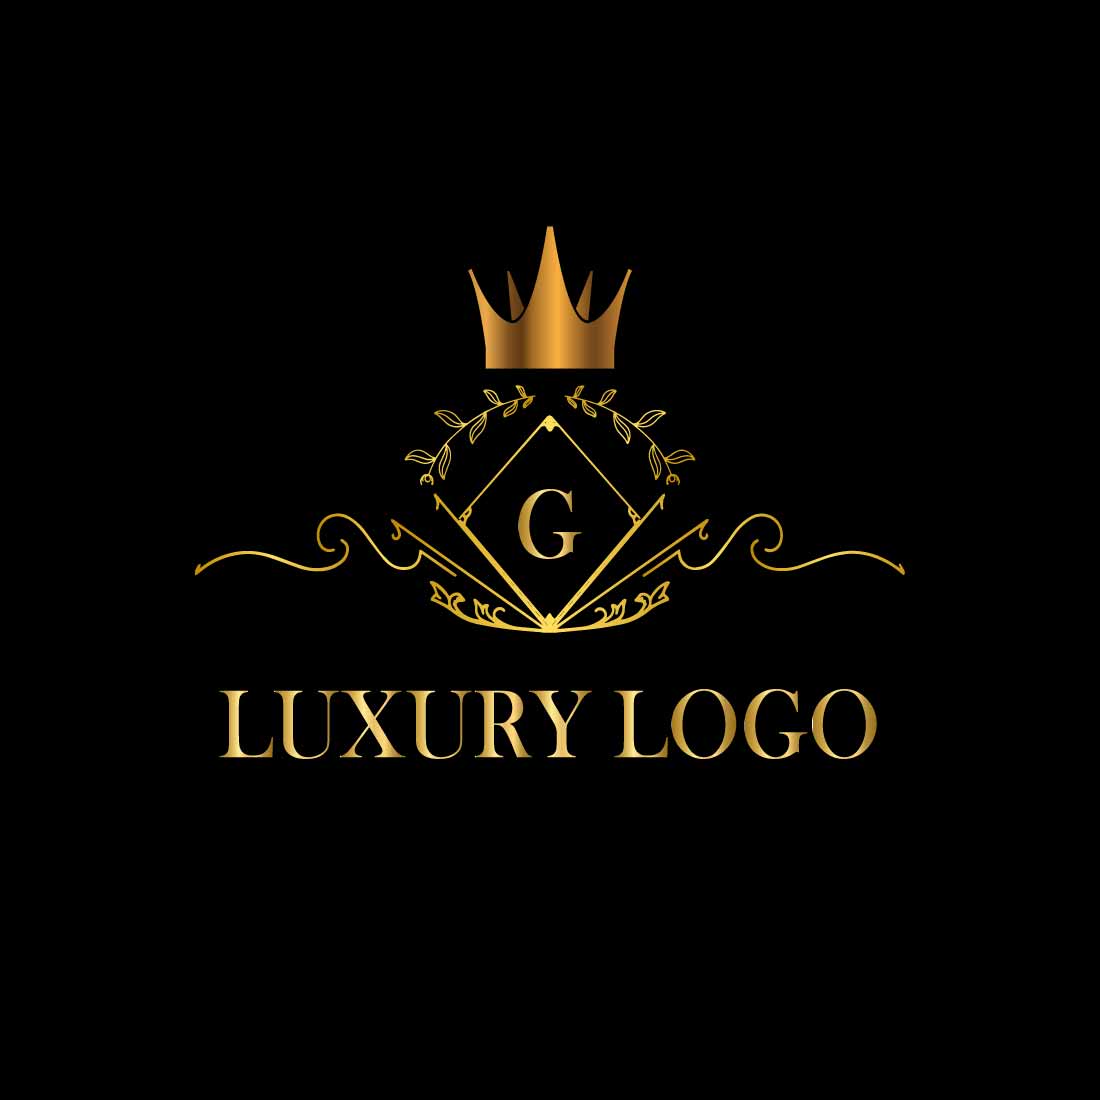 Attractive Luxury Golden Logo Design preview image.